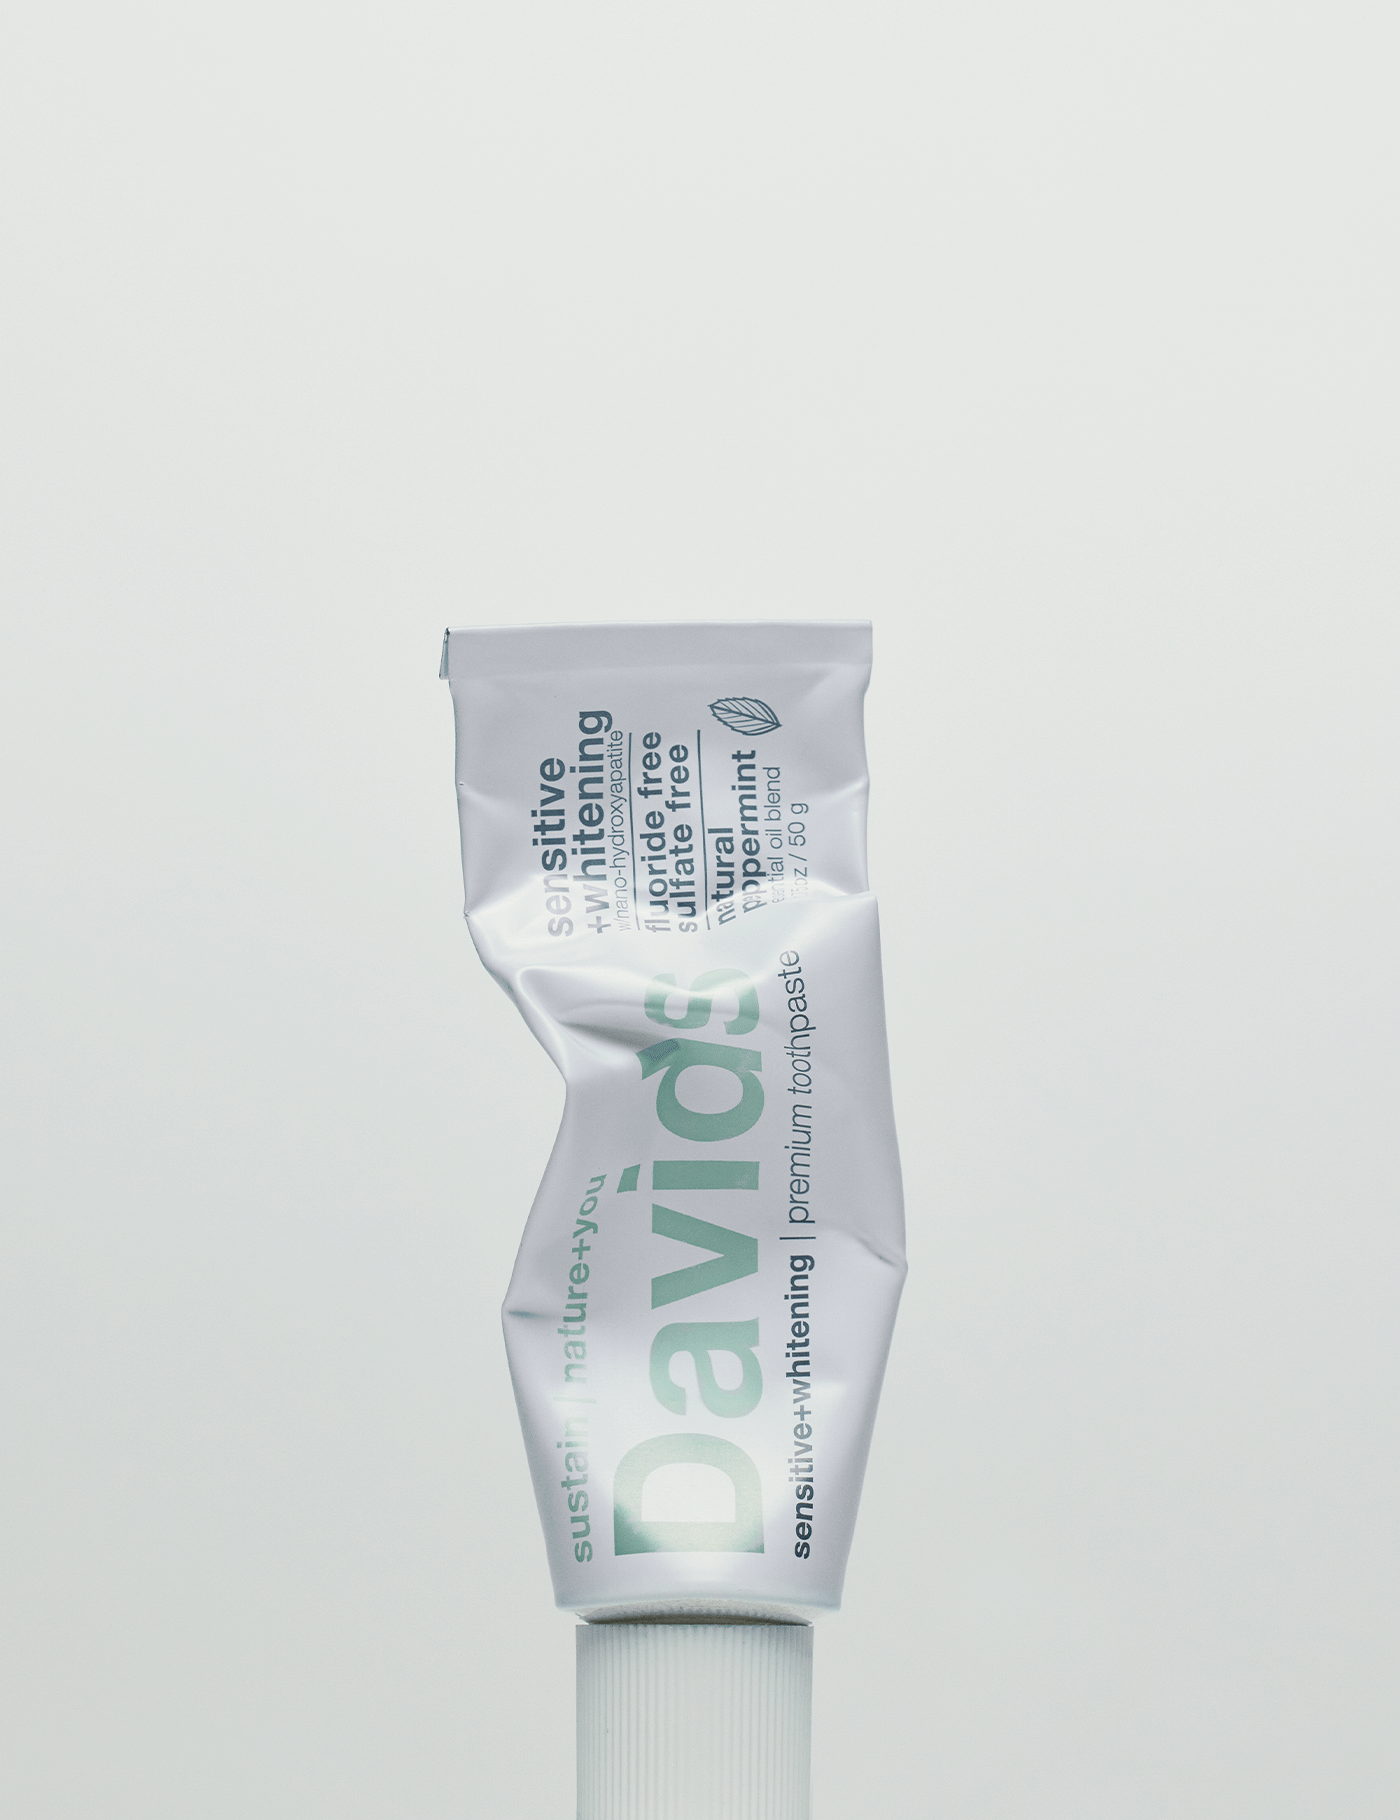 Davids travel size premium toothpaste / sensitive+whitening nano-hydroxyapatite  /  peppermint